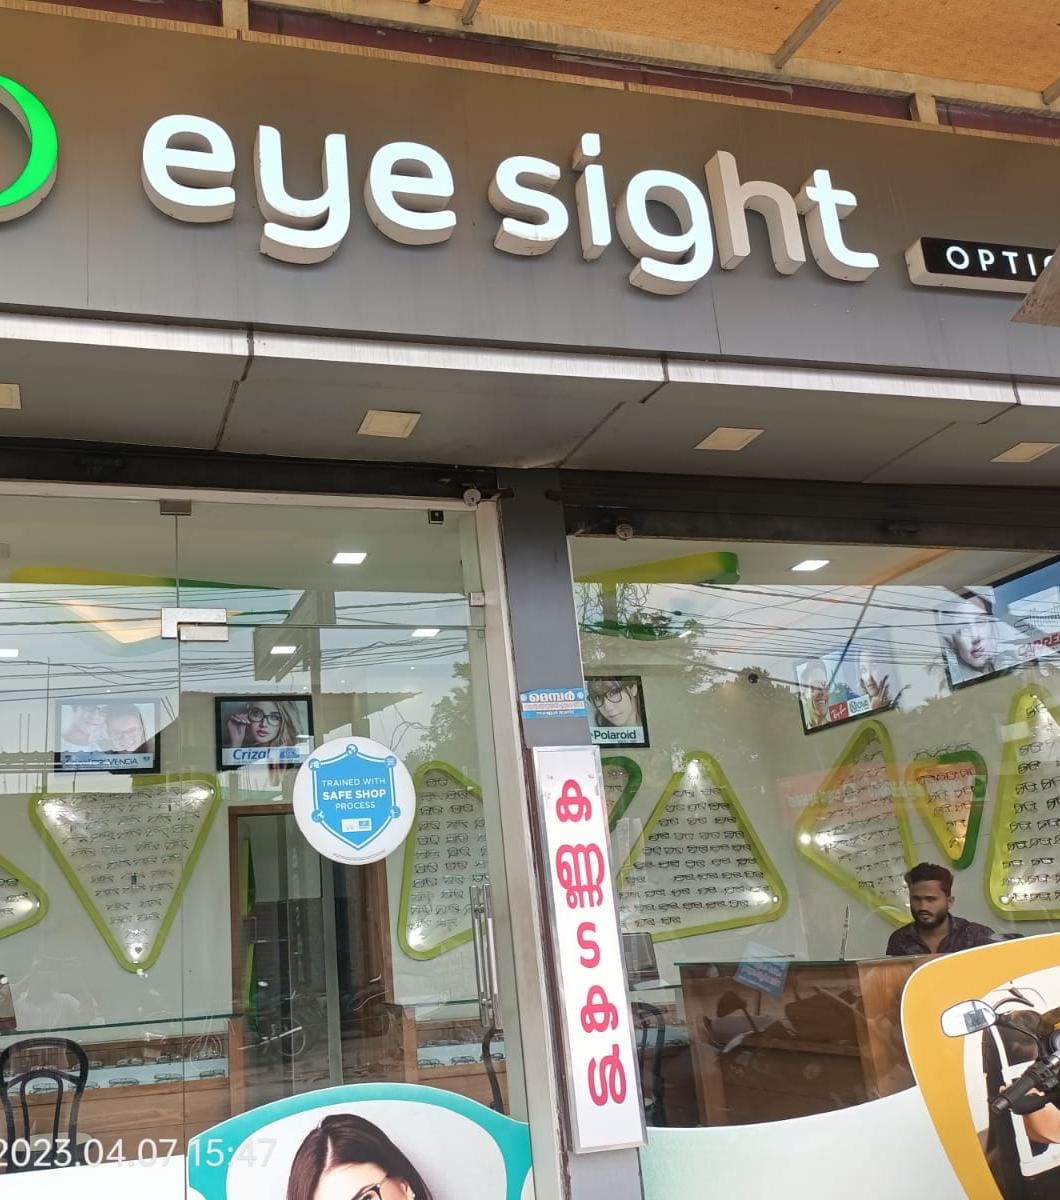 Eye sight opticals